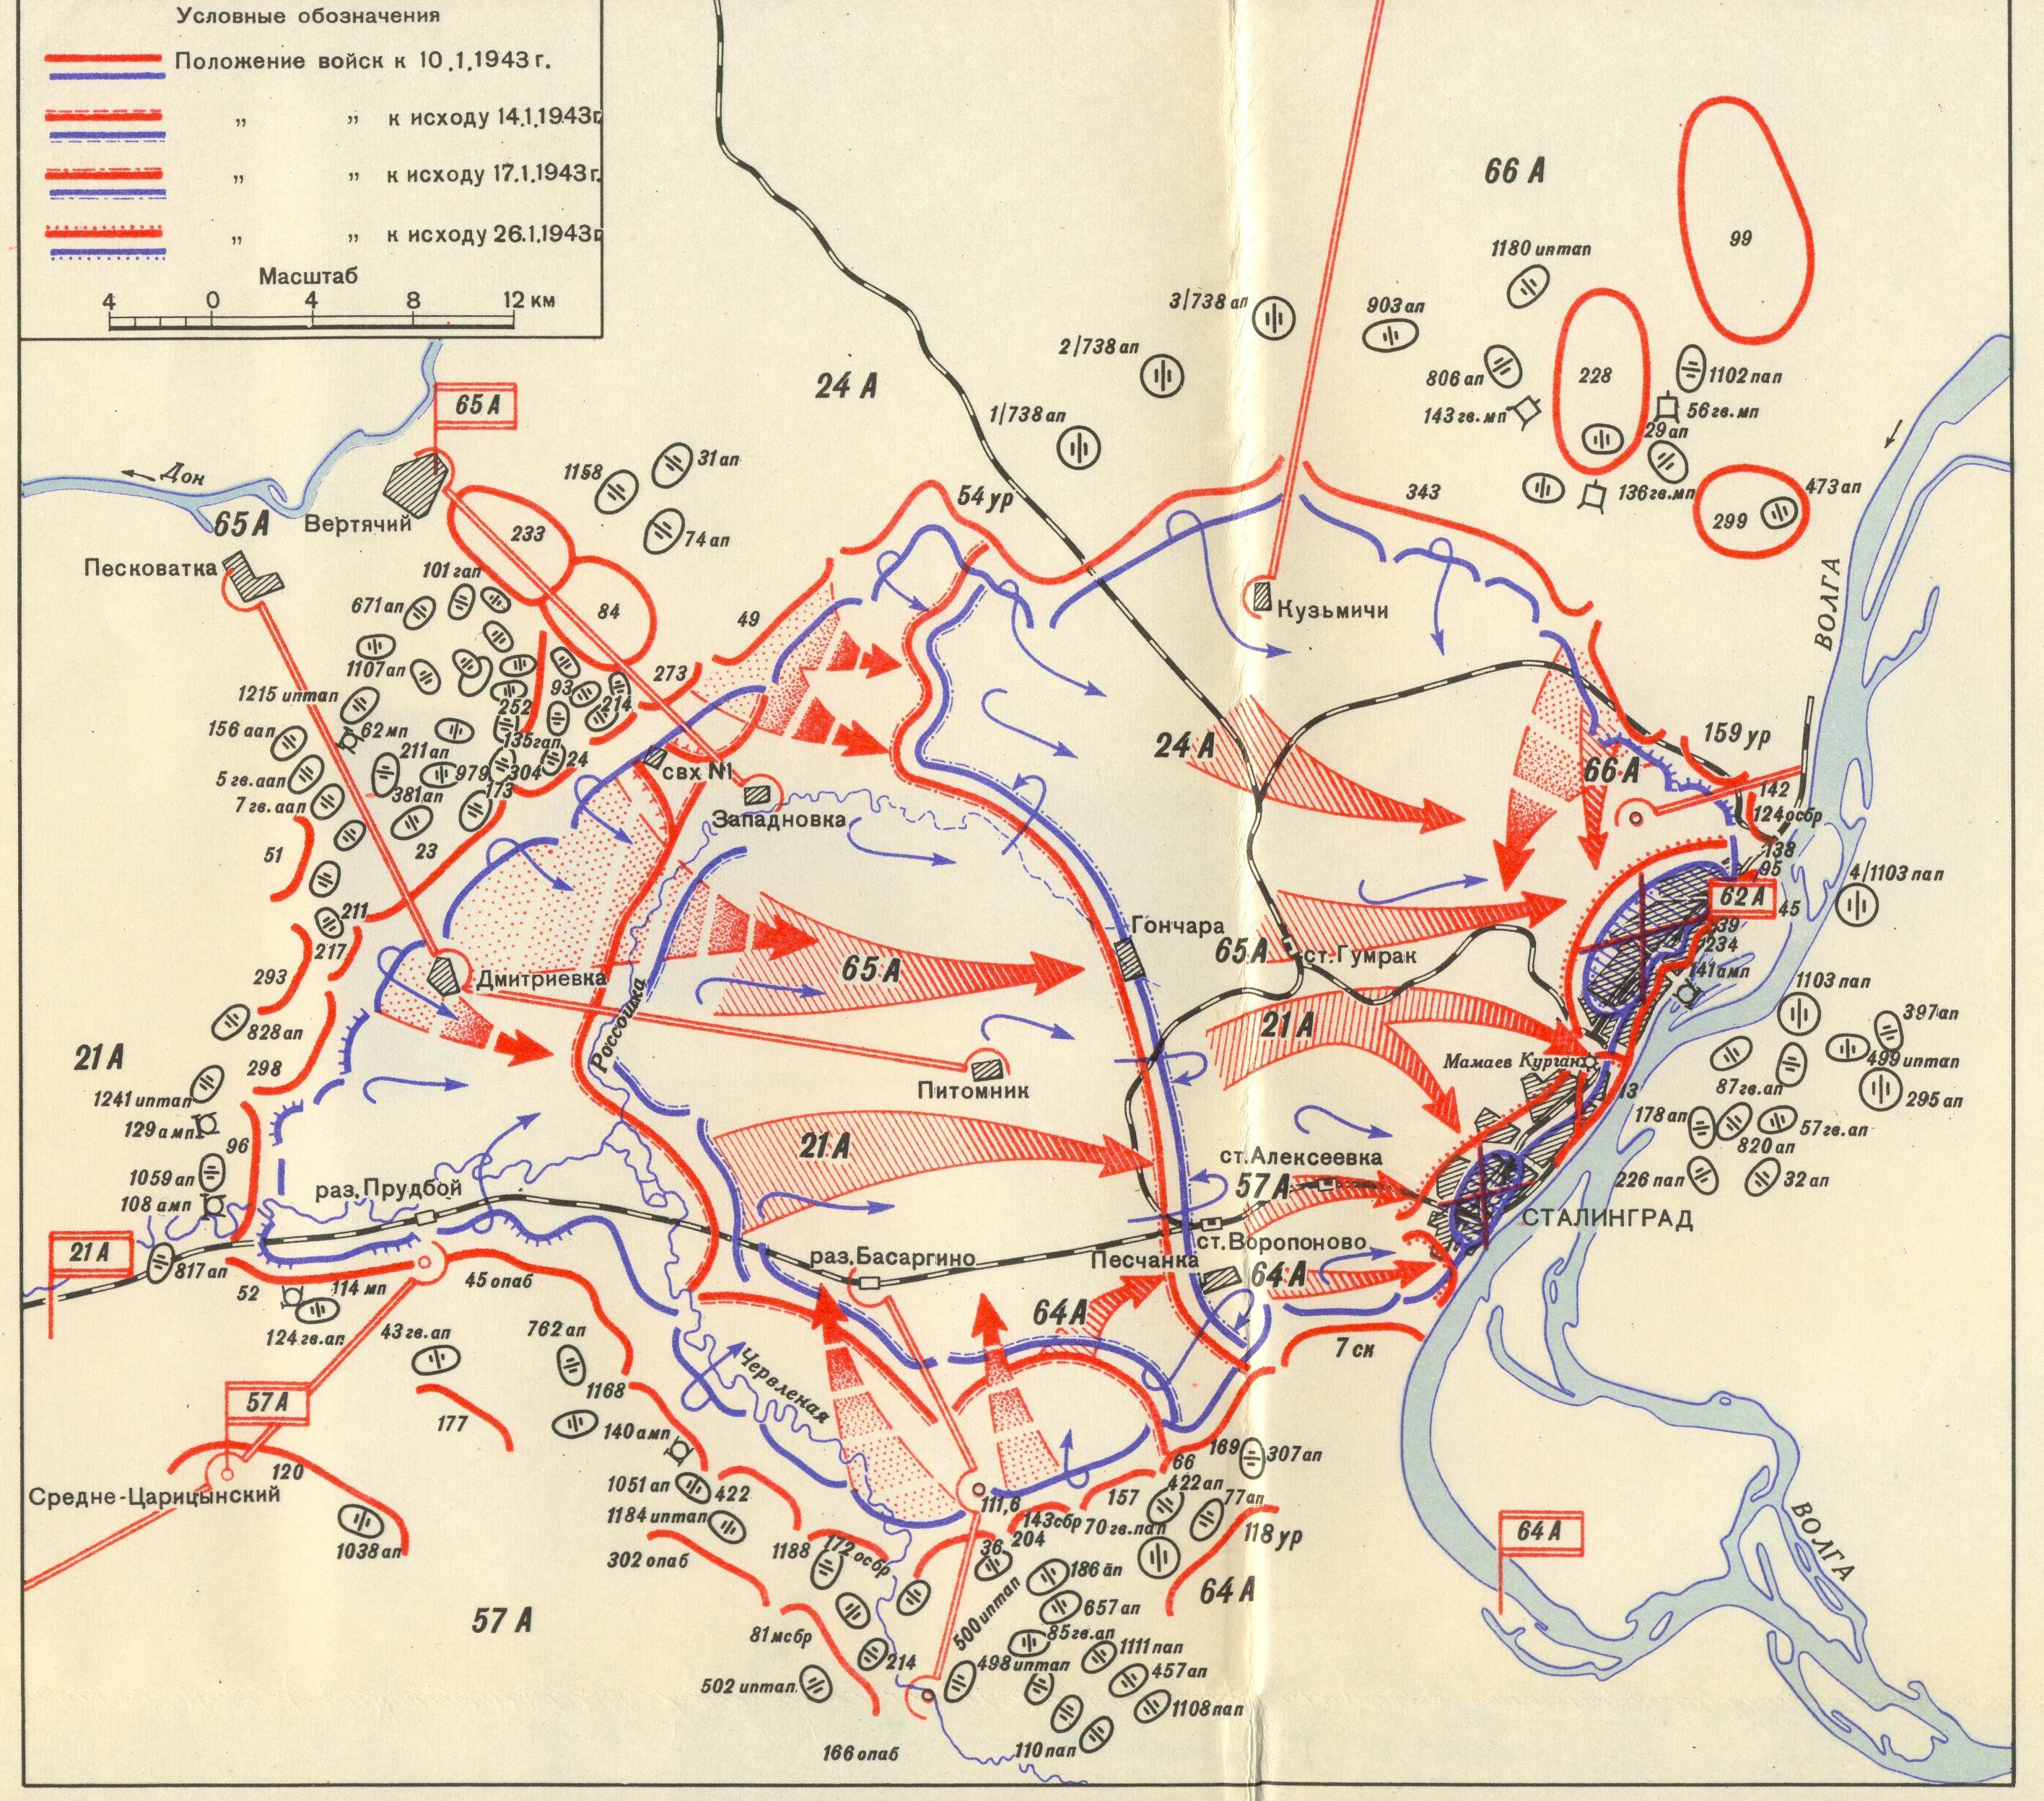 battlecast stalingrad russian map showing city layout